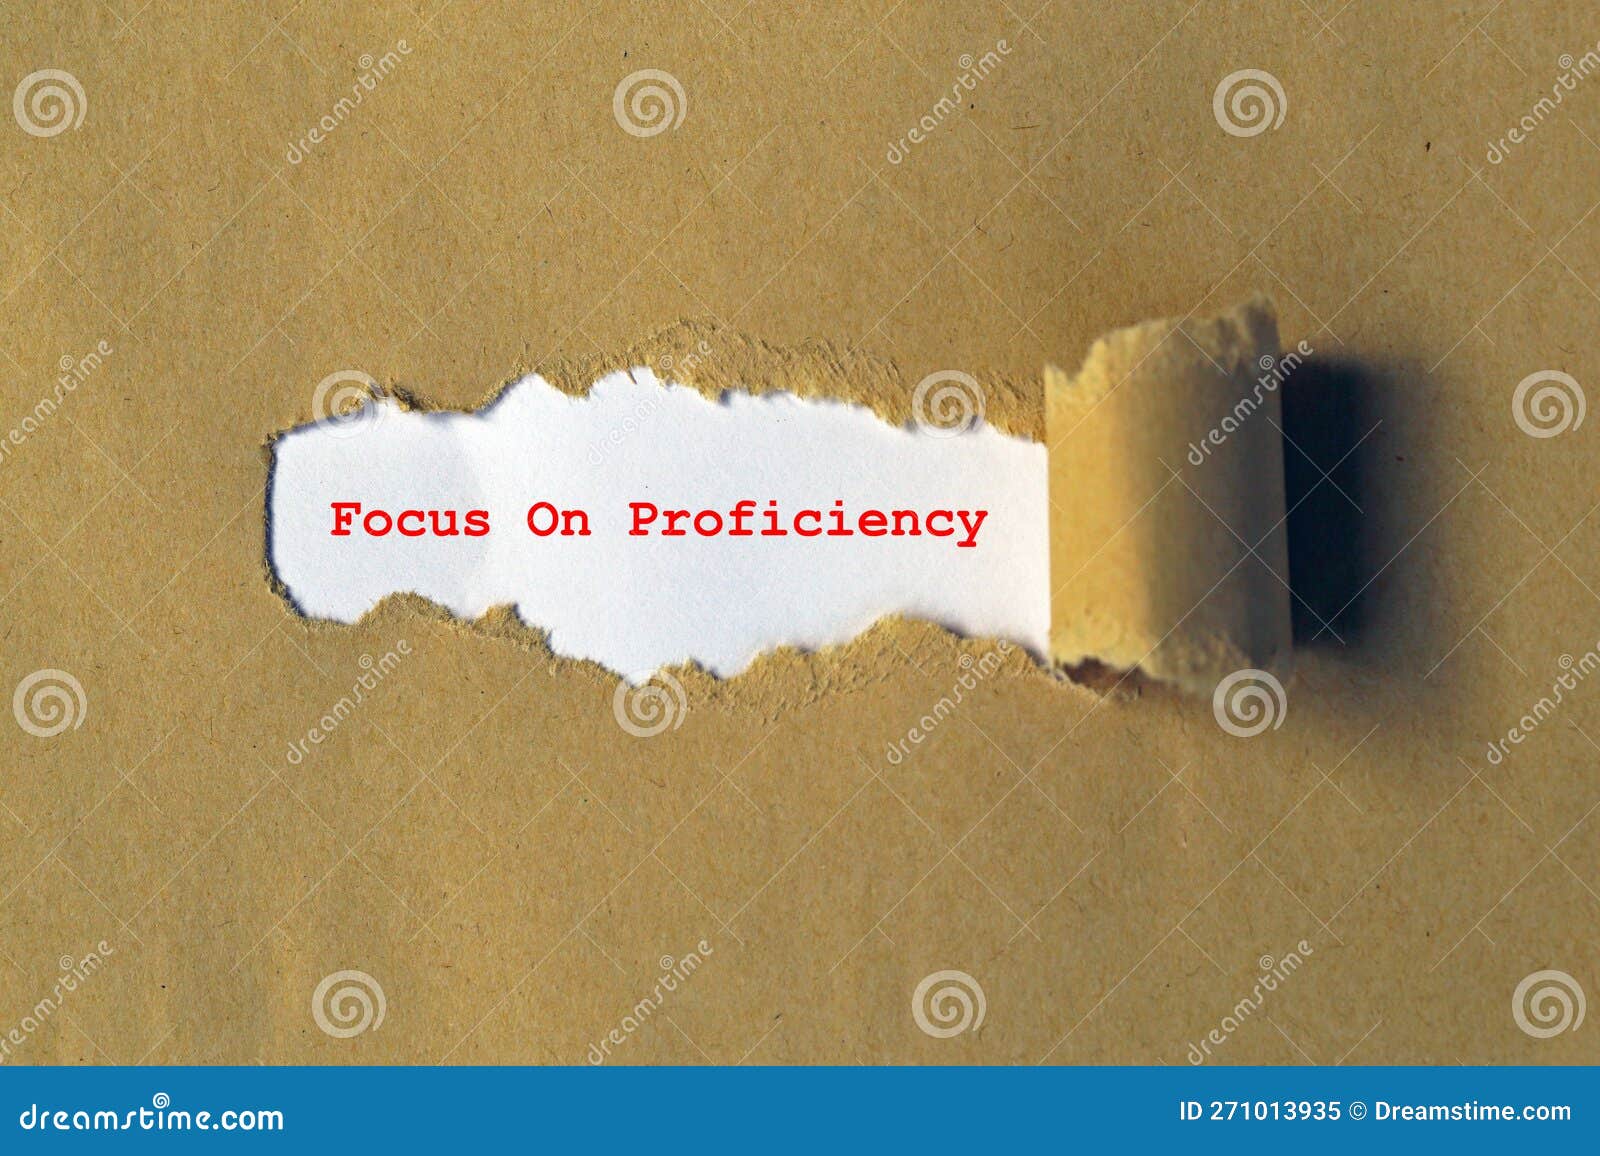 focus on proficiency on paper